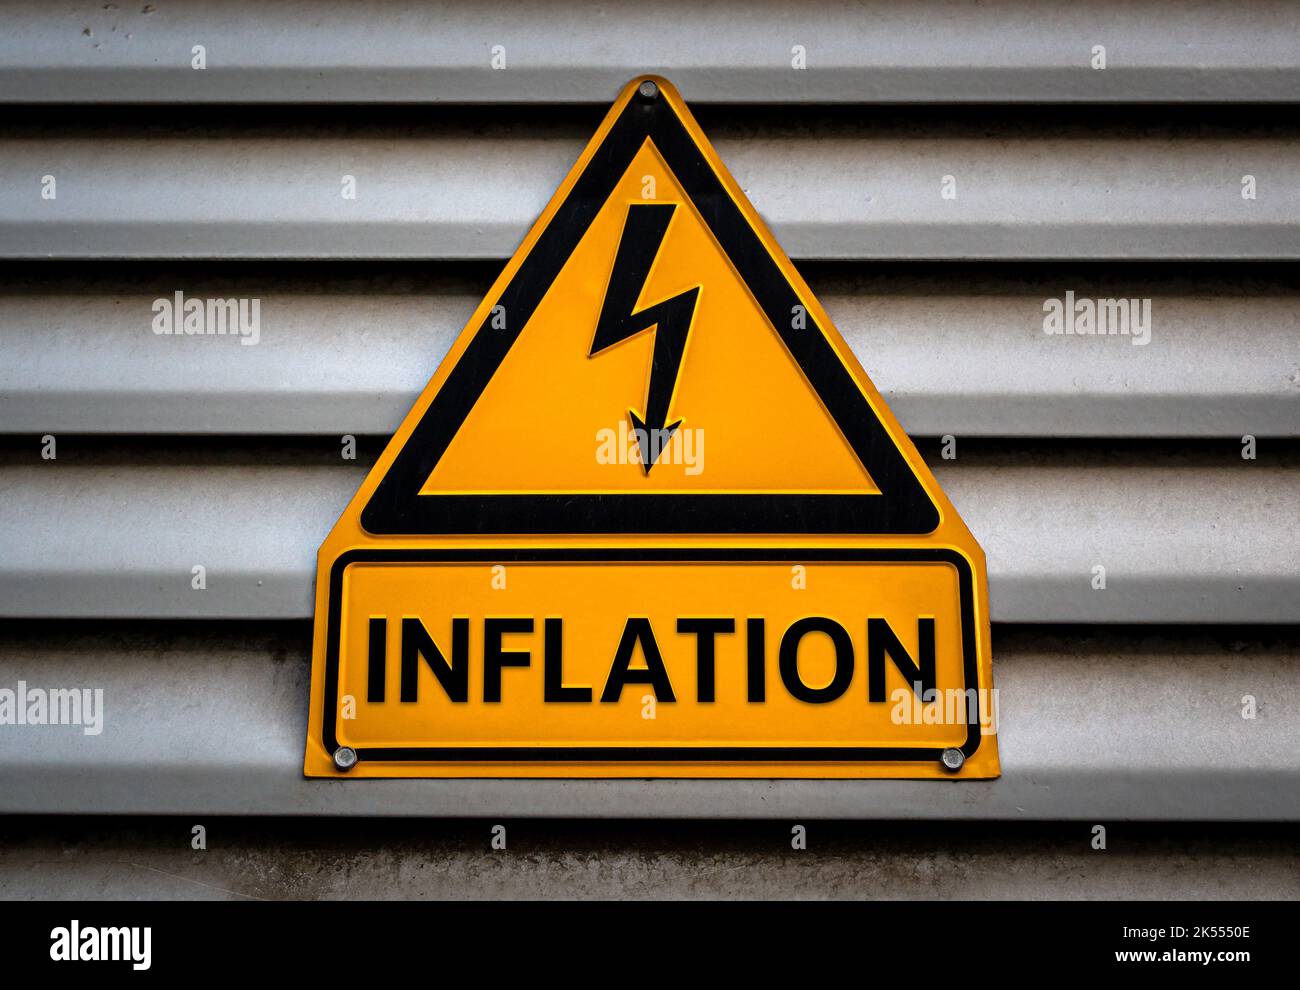 Inflation - warning sign Stock Photo